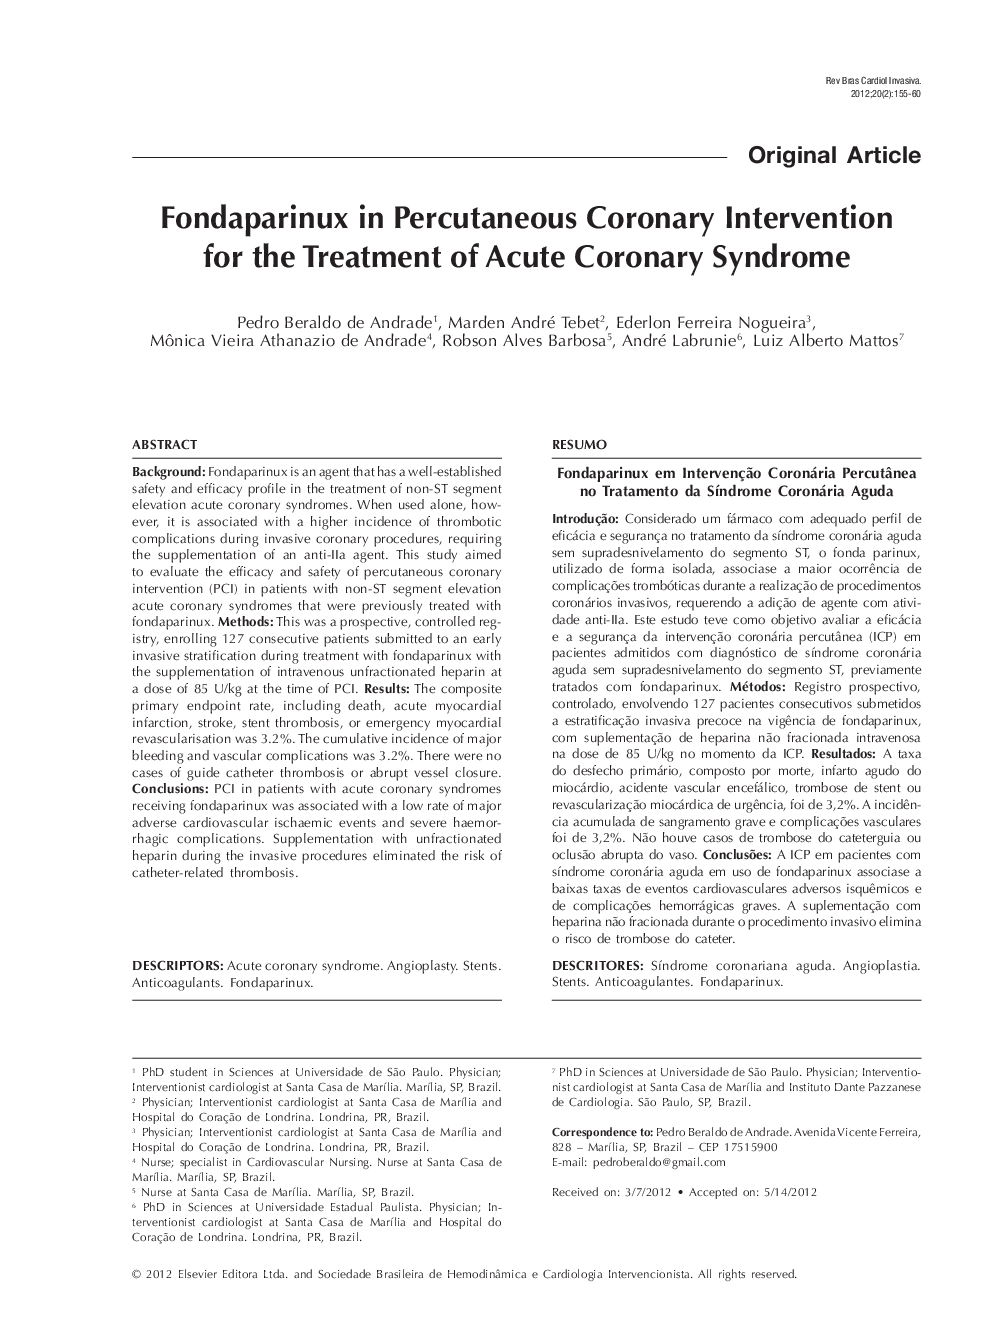 Fondaparinux in Percutaneous Coronary Intervention for the Treatment of Acute Coronary Syndrome